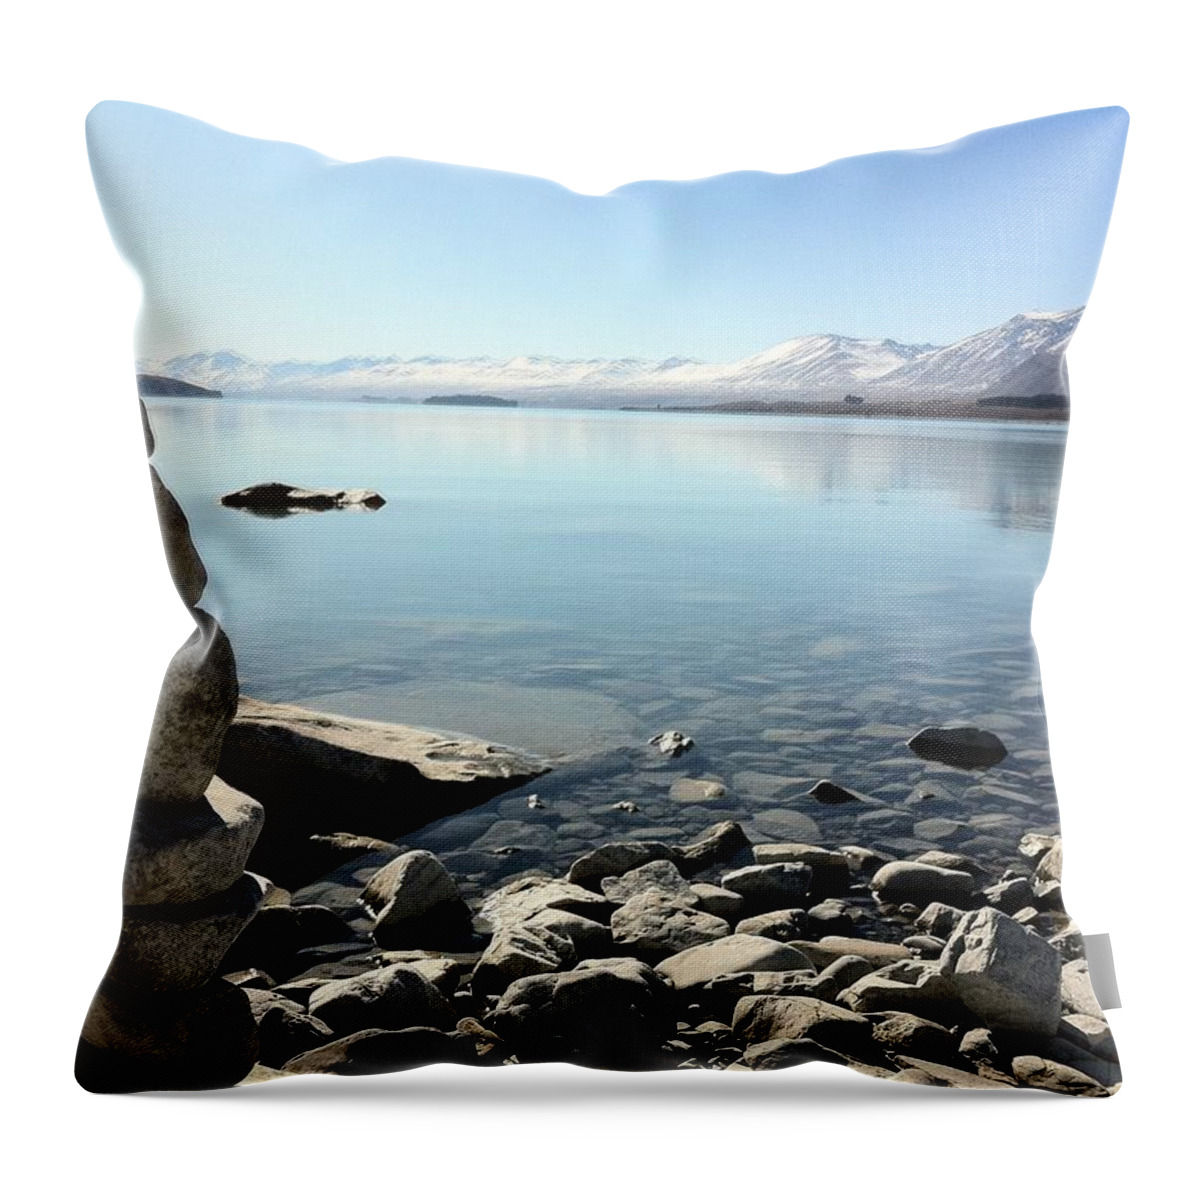 Tekapo Throw Pillow featuring the photograph Stacked Stones On Lake Tekapo, New by Verity E. Milligan